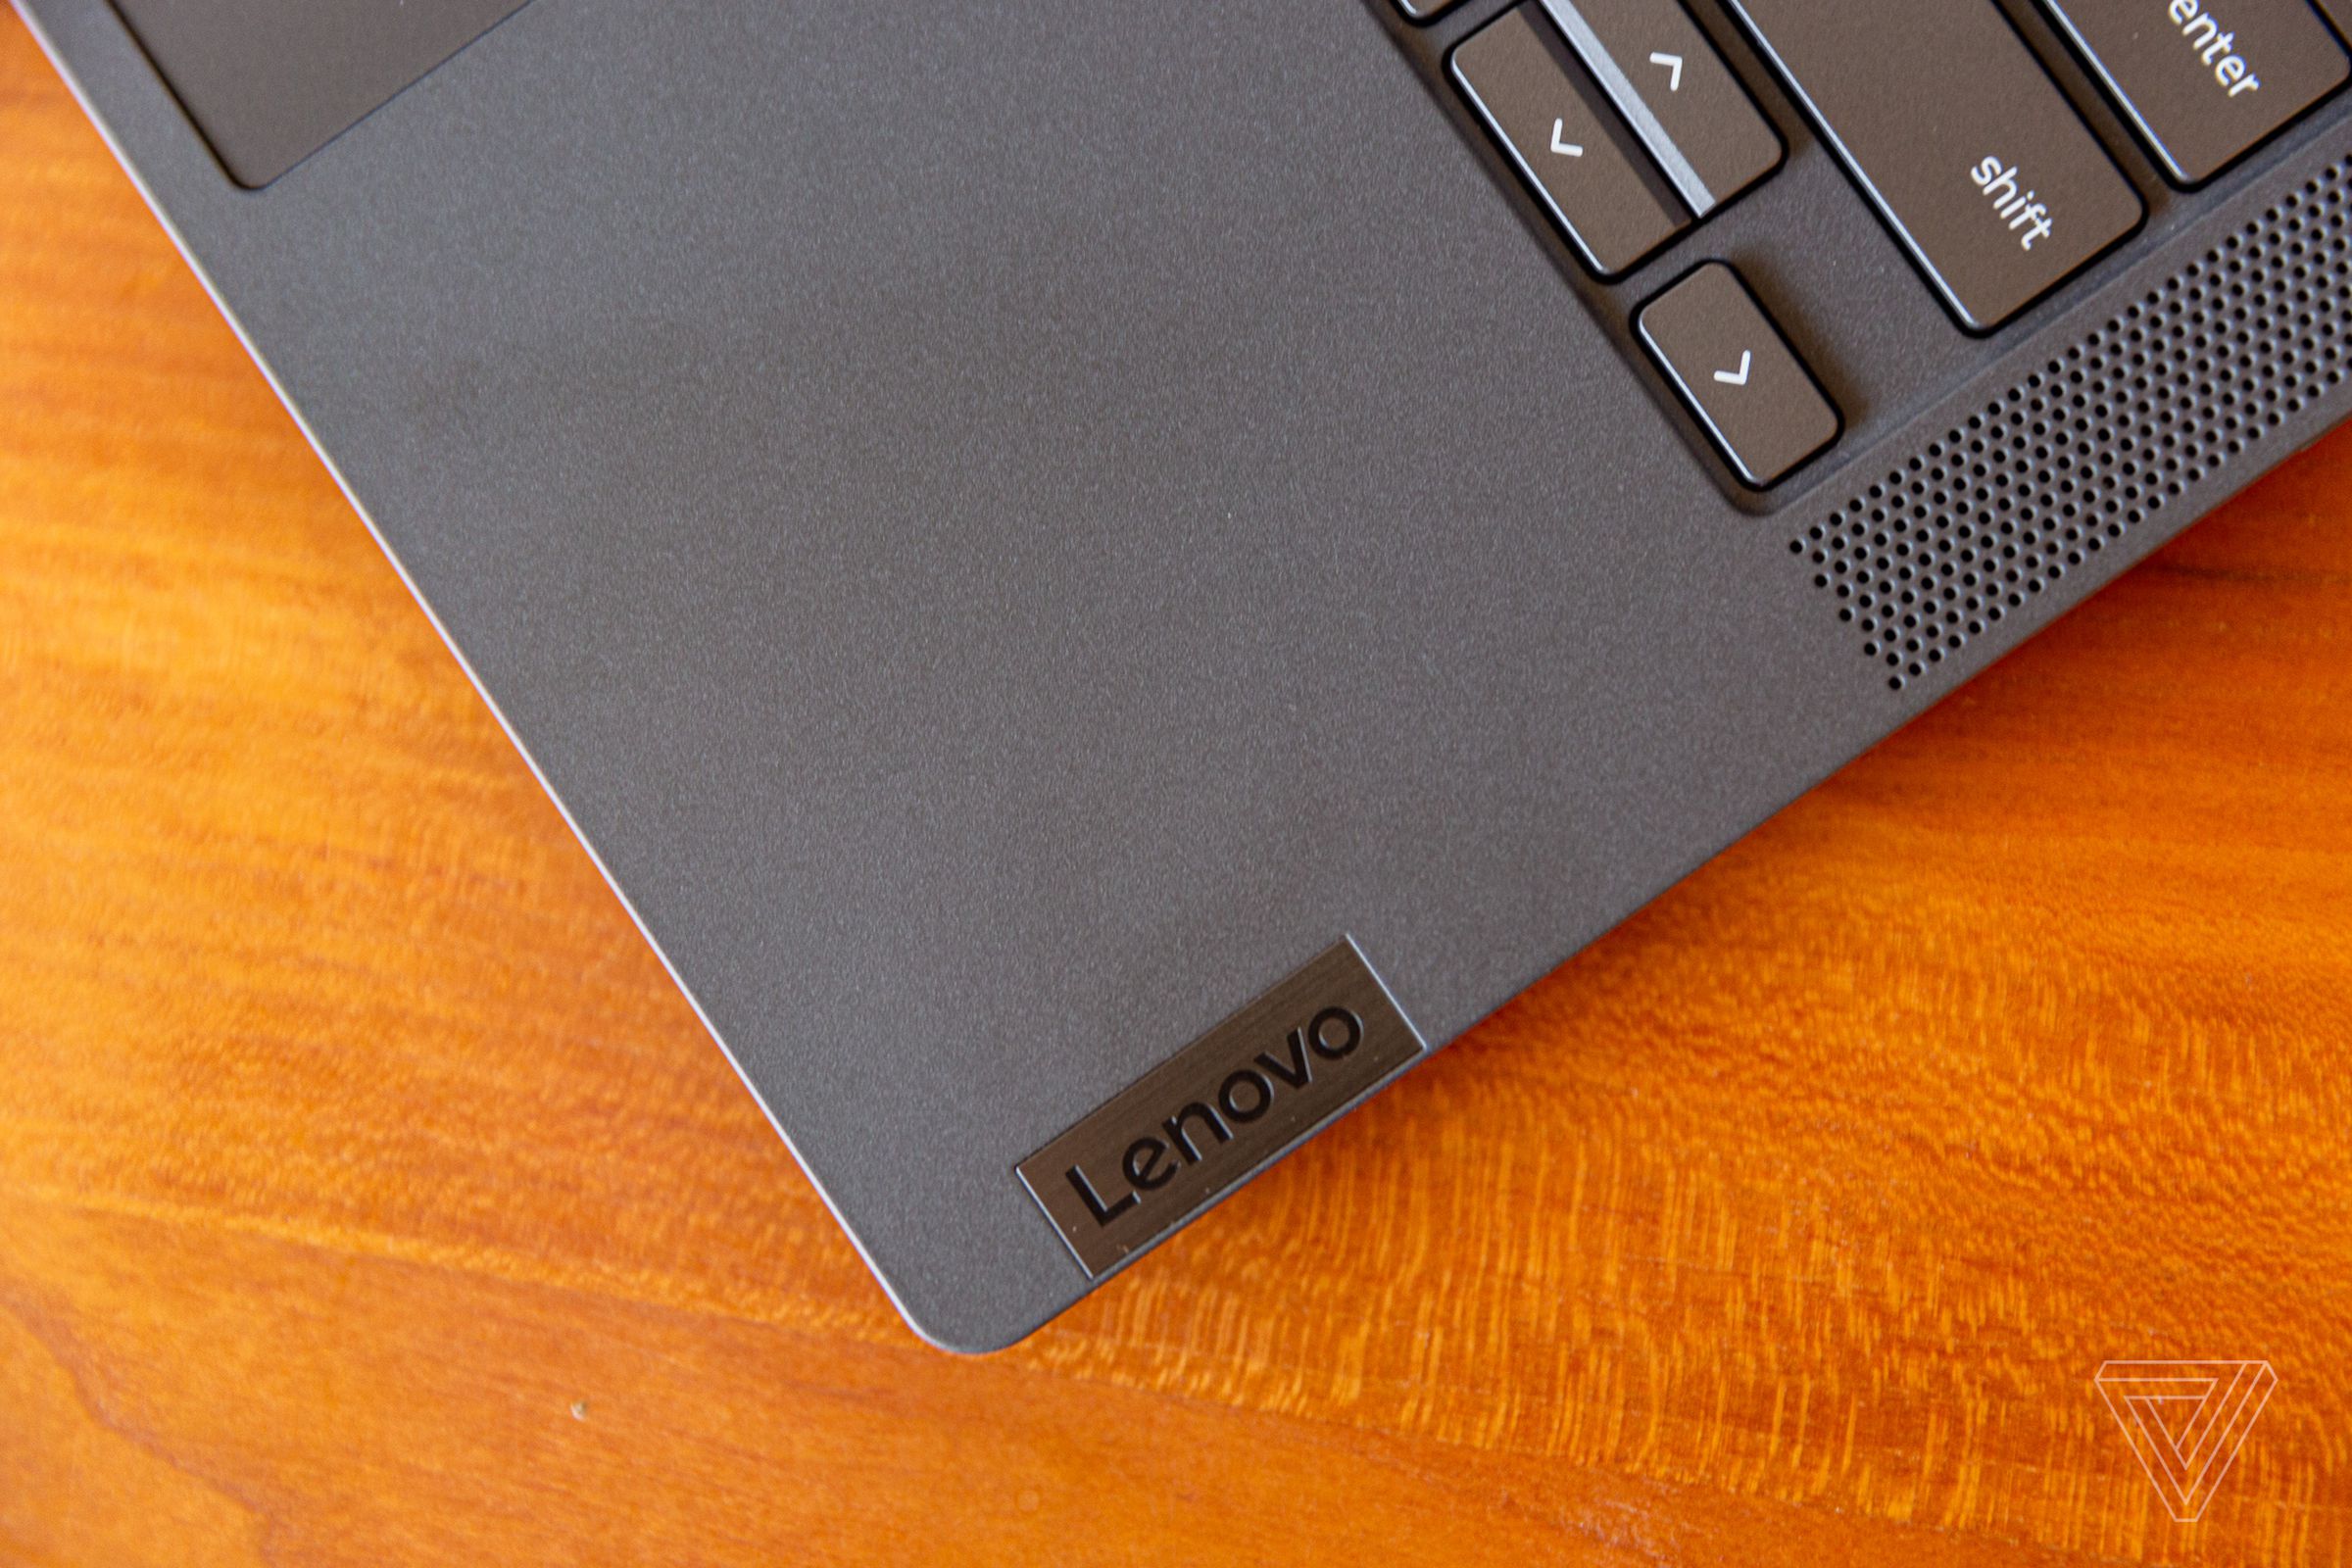 The bottom right corner of the Lenovo Flex 5 Chromebook, angled to the left.